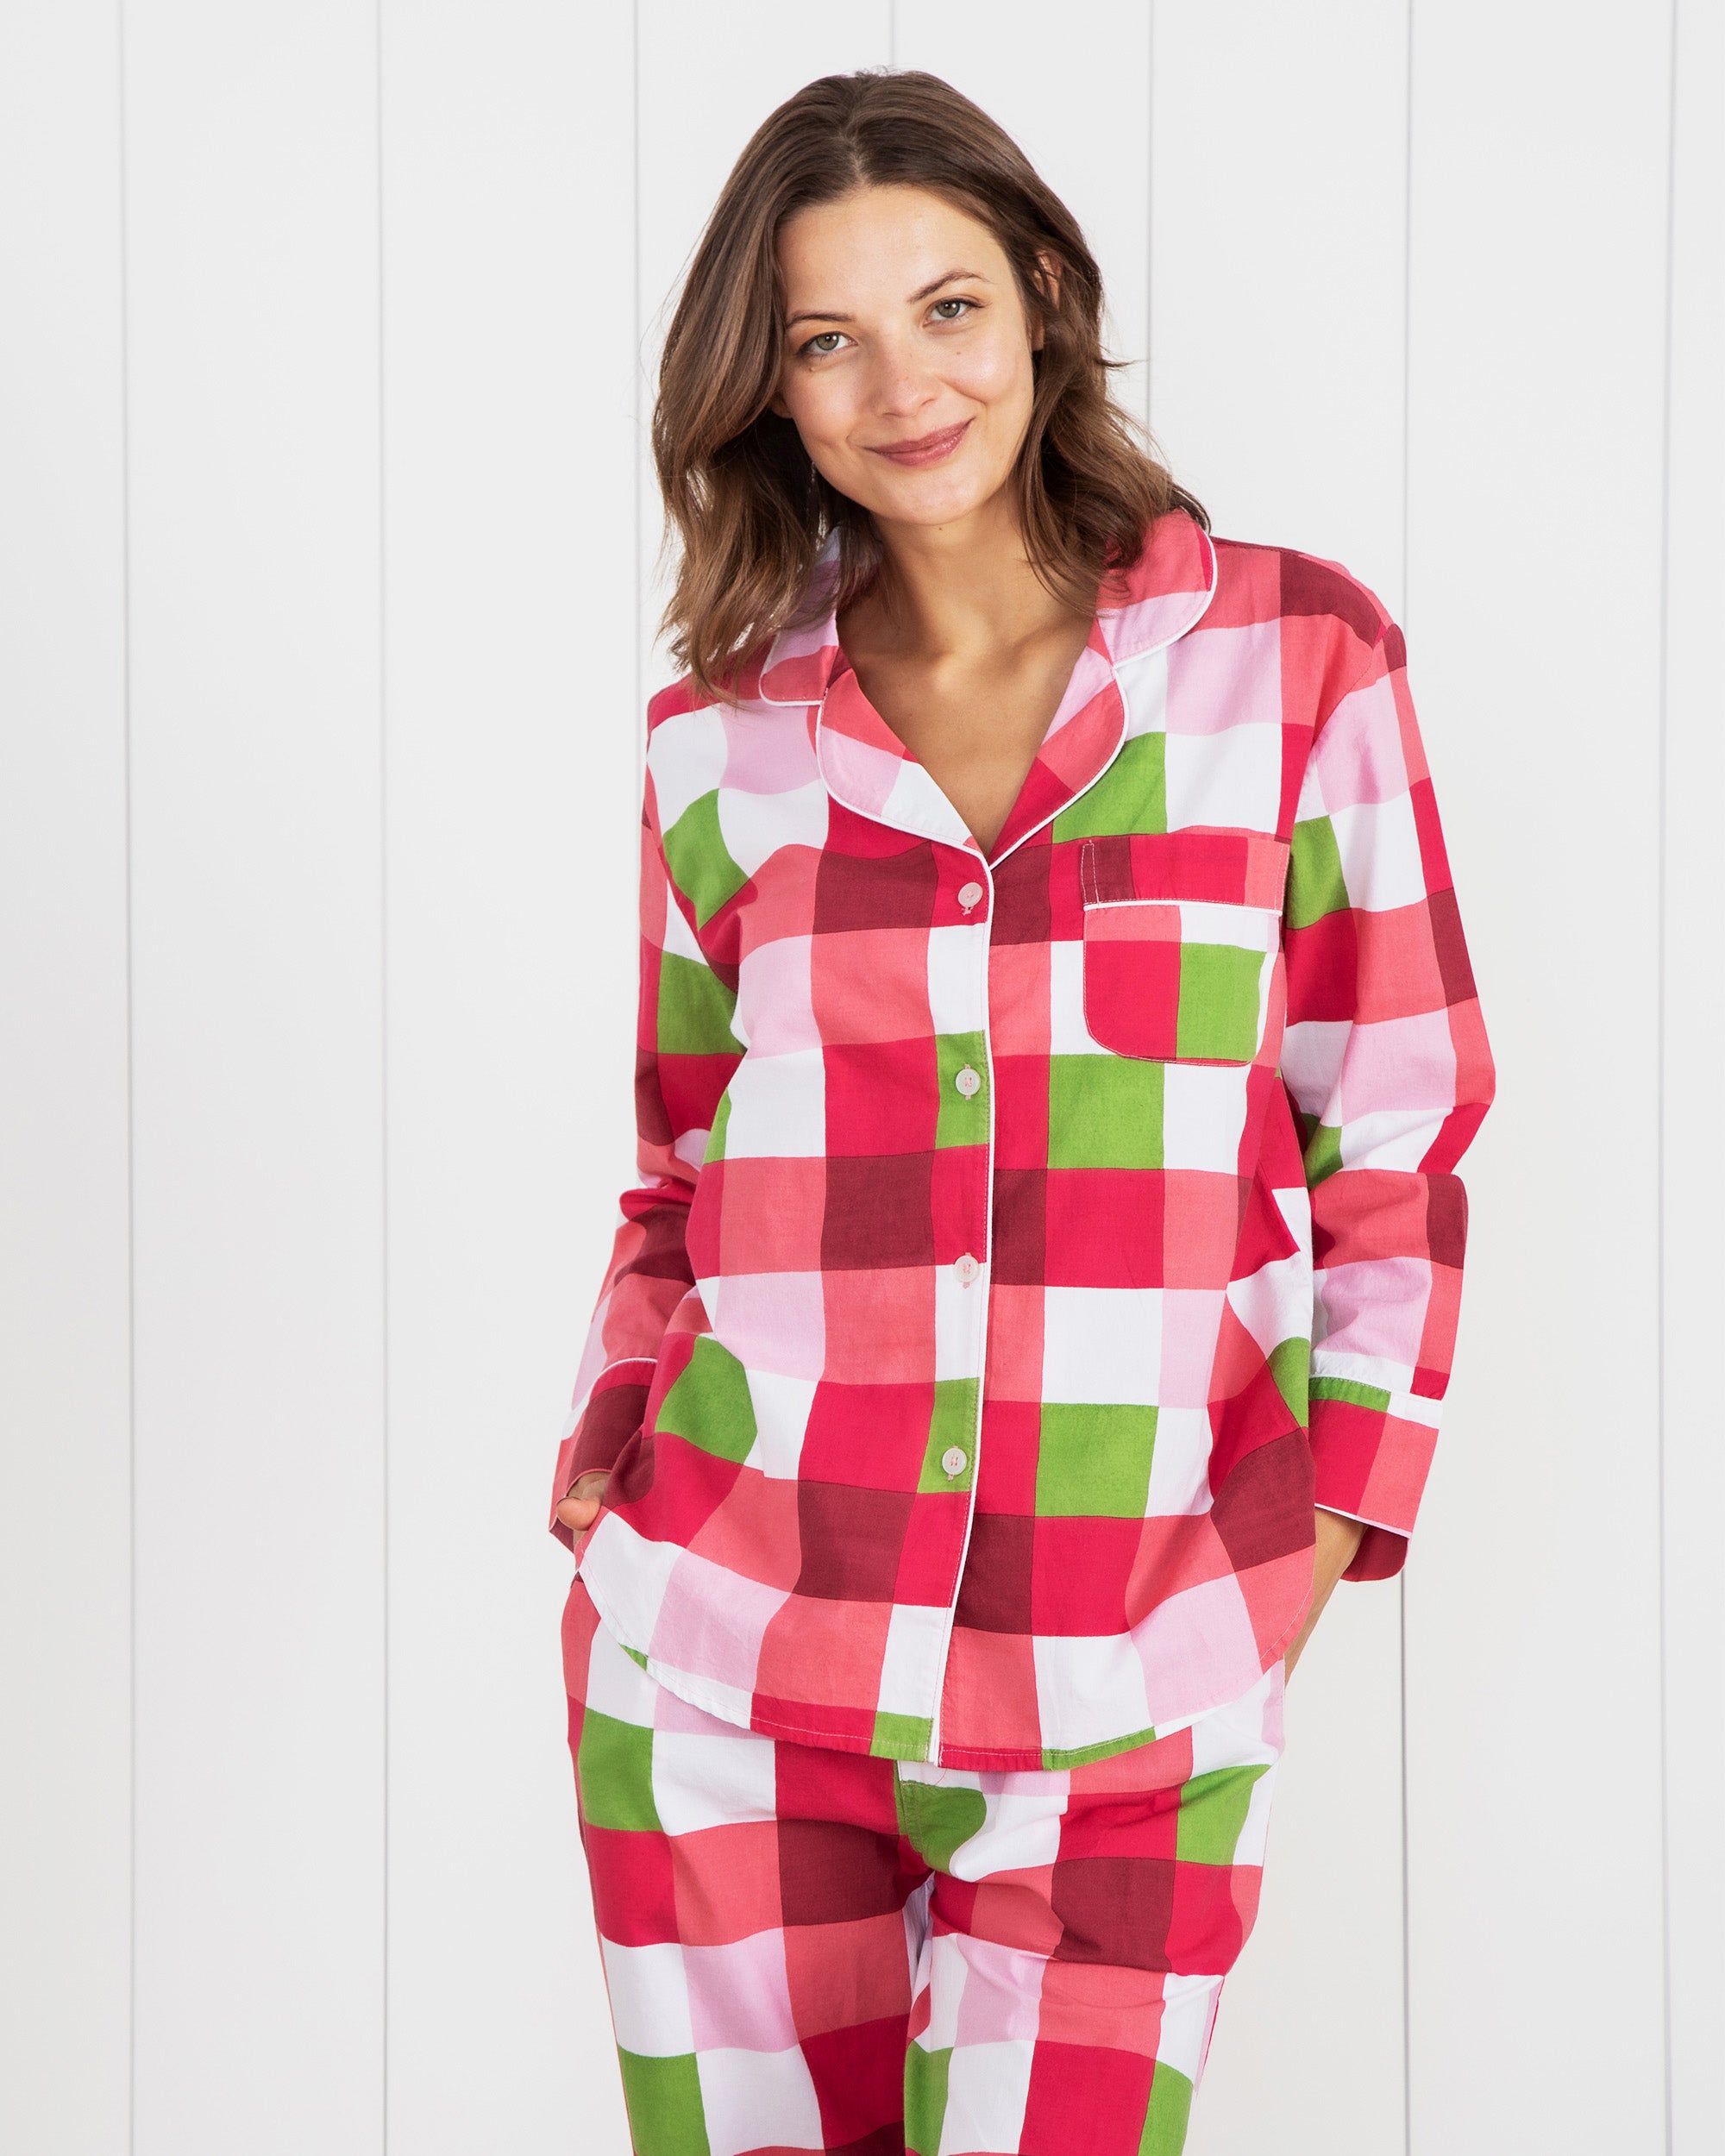 Just Love 100% Cotton Jersey Women Plaid Pajama Pants Sleepwear (Solid  Black, Small)